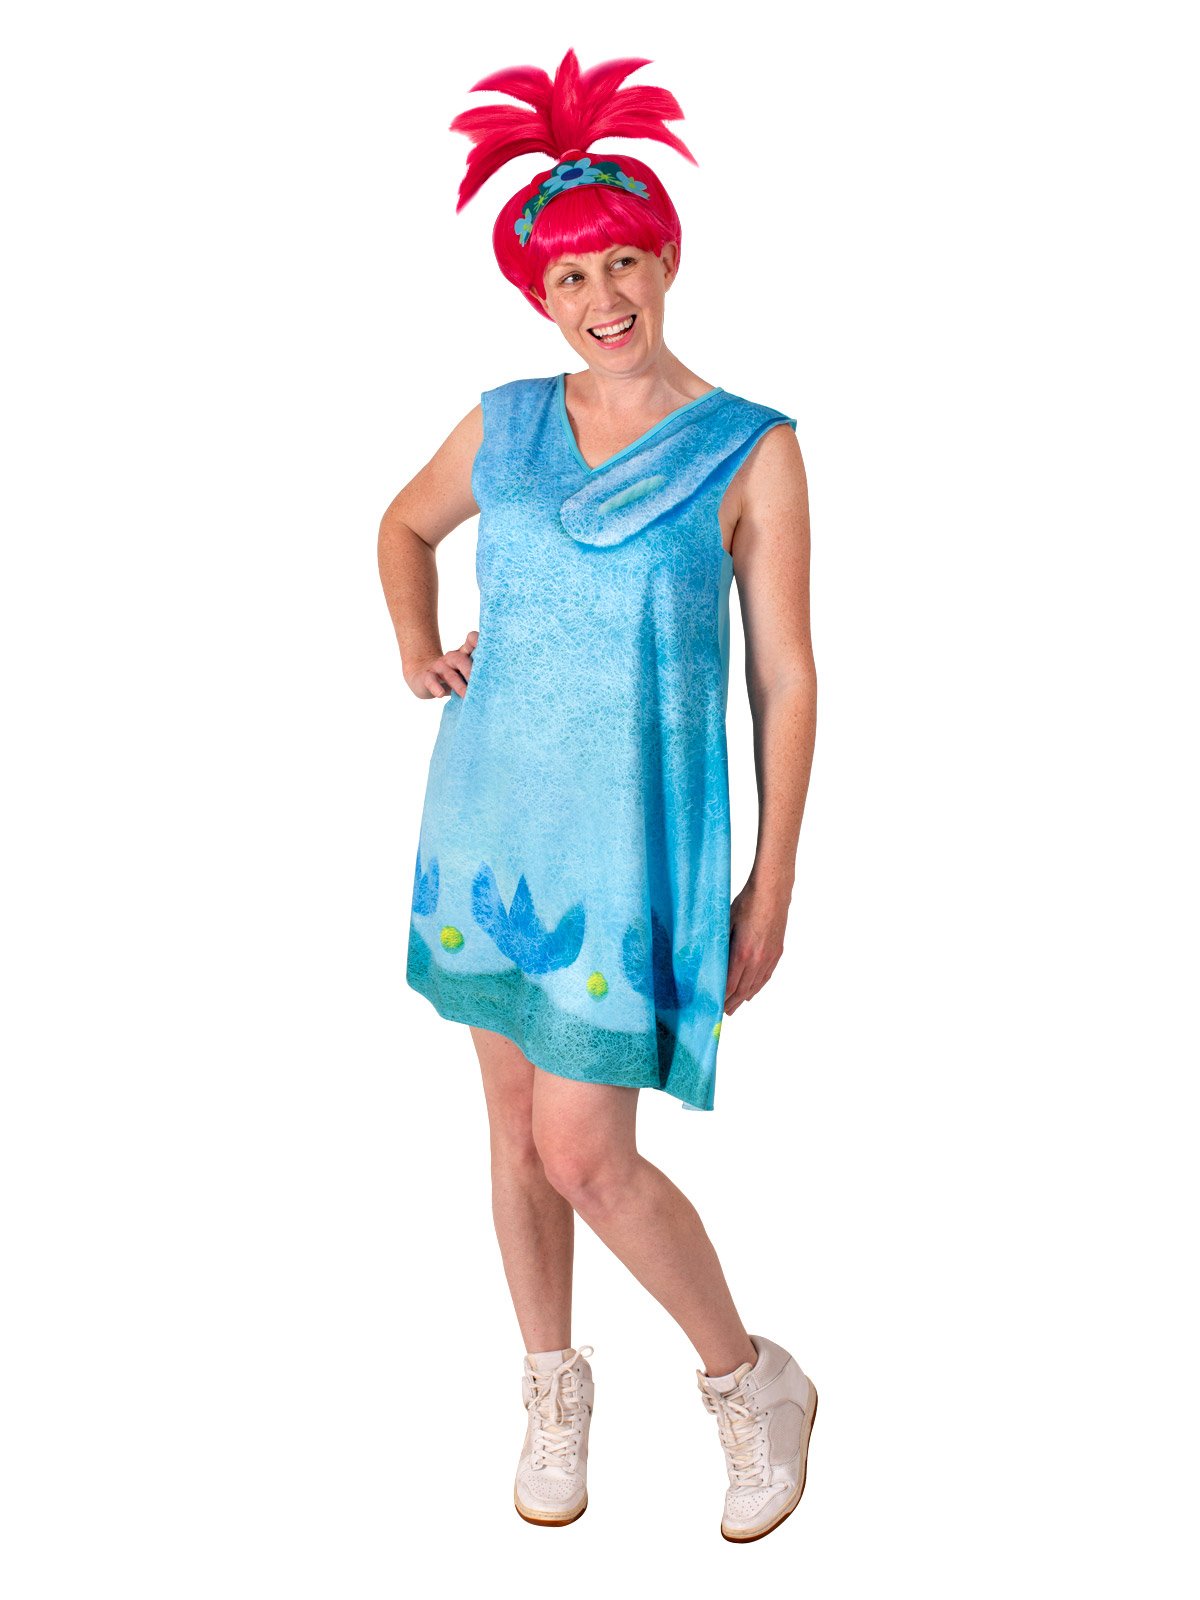 Costume Adult Trolls Poppy 2 Adult Medium Dress & Wig